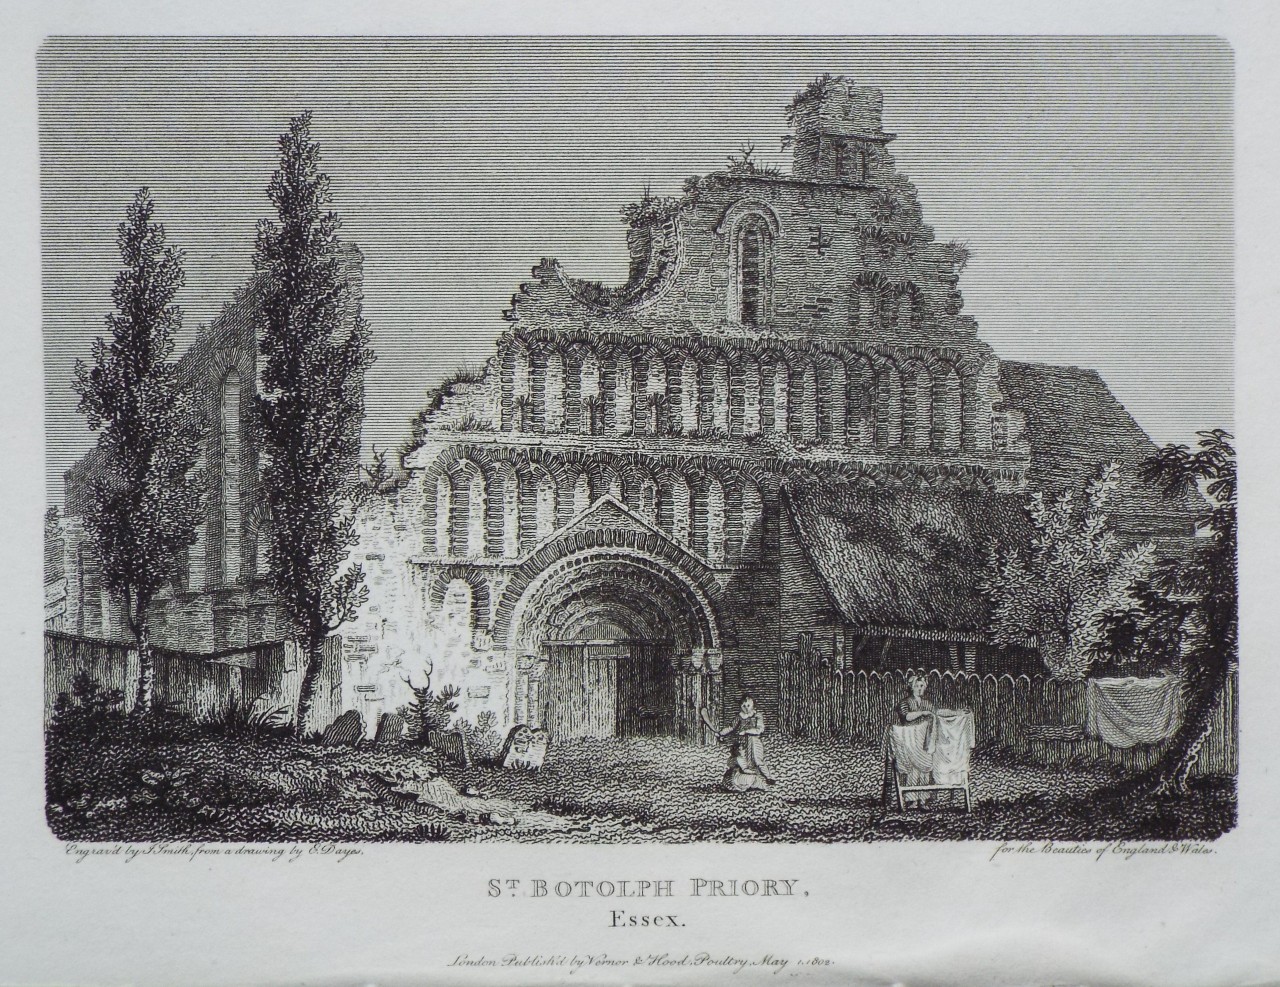 Print - St. Botolph Priory, Essex. - Smith